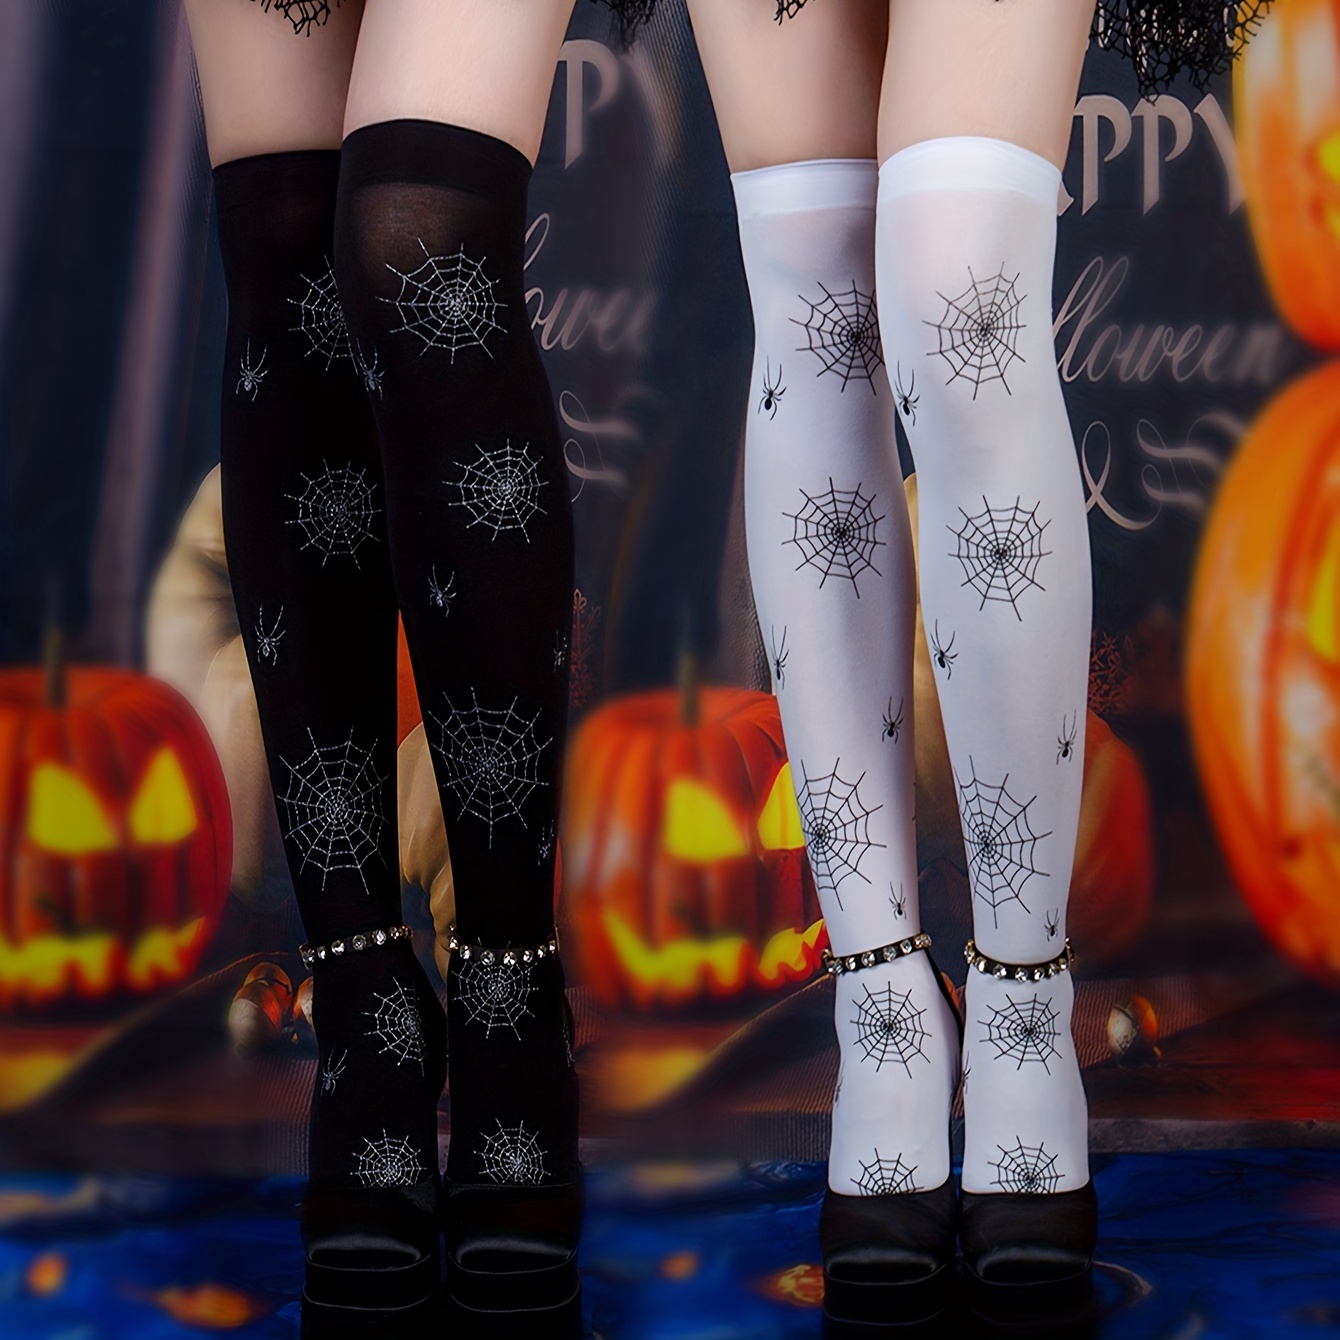 SEAUR - Halloween Stockings for Women Skull Knee High Stocking Over Knee  Spider Socks Funny Party Cosplay Festival 4 Pairs